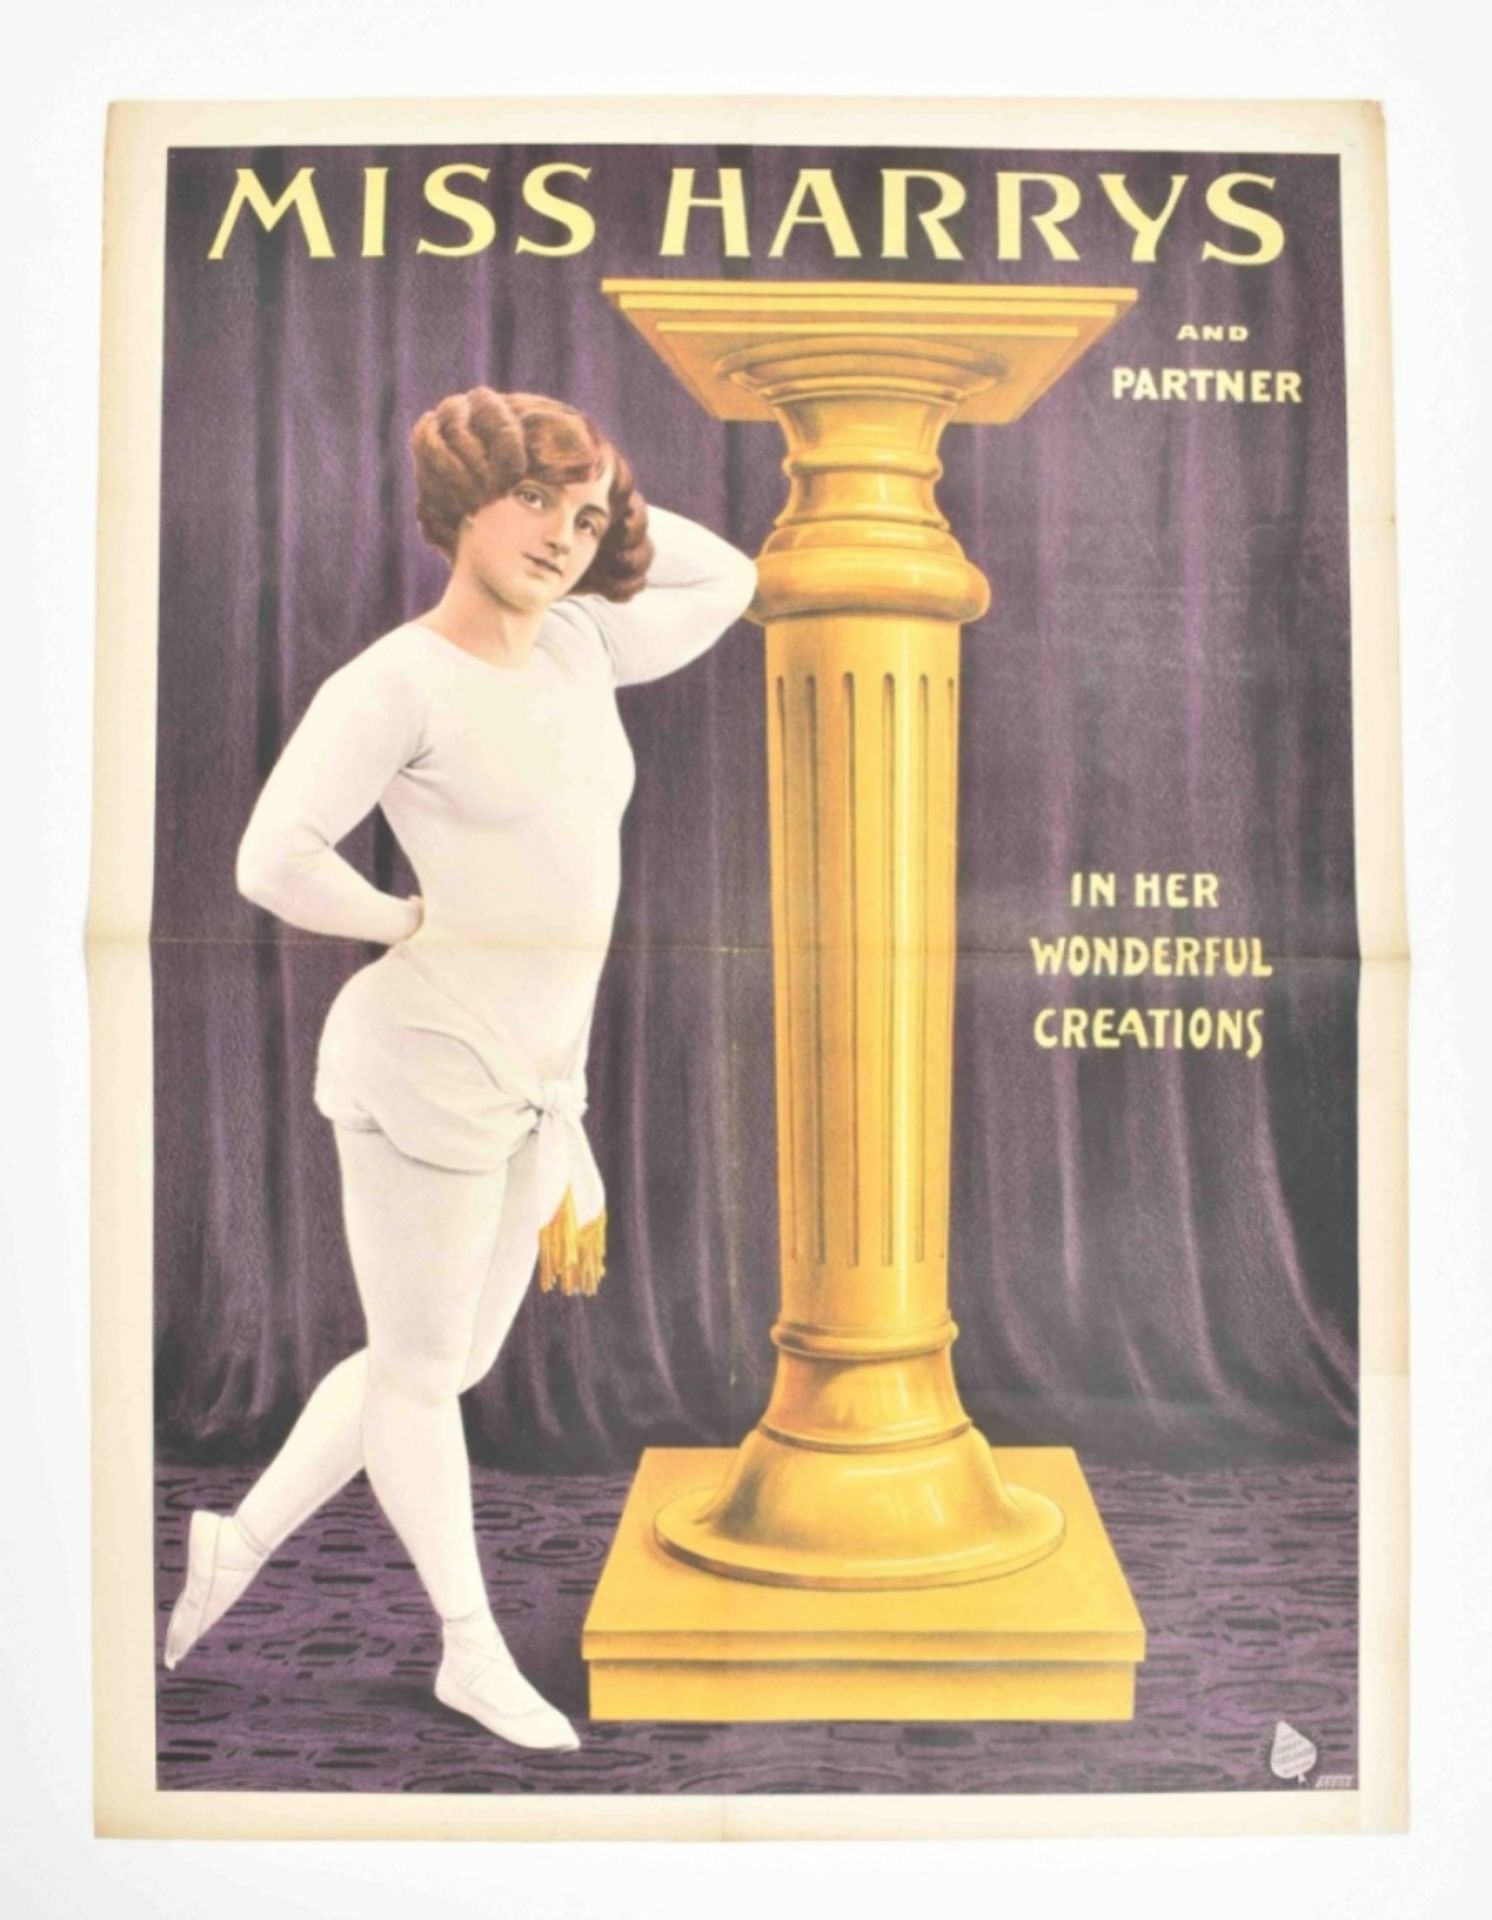 [Entertainment] Miss Harrys and partner In her wonderful creations. Friedländer, Hamburg, 1911